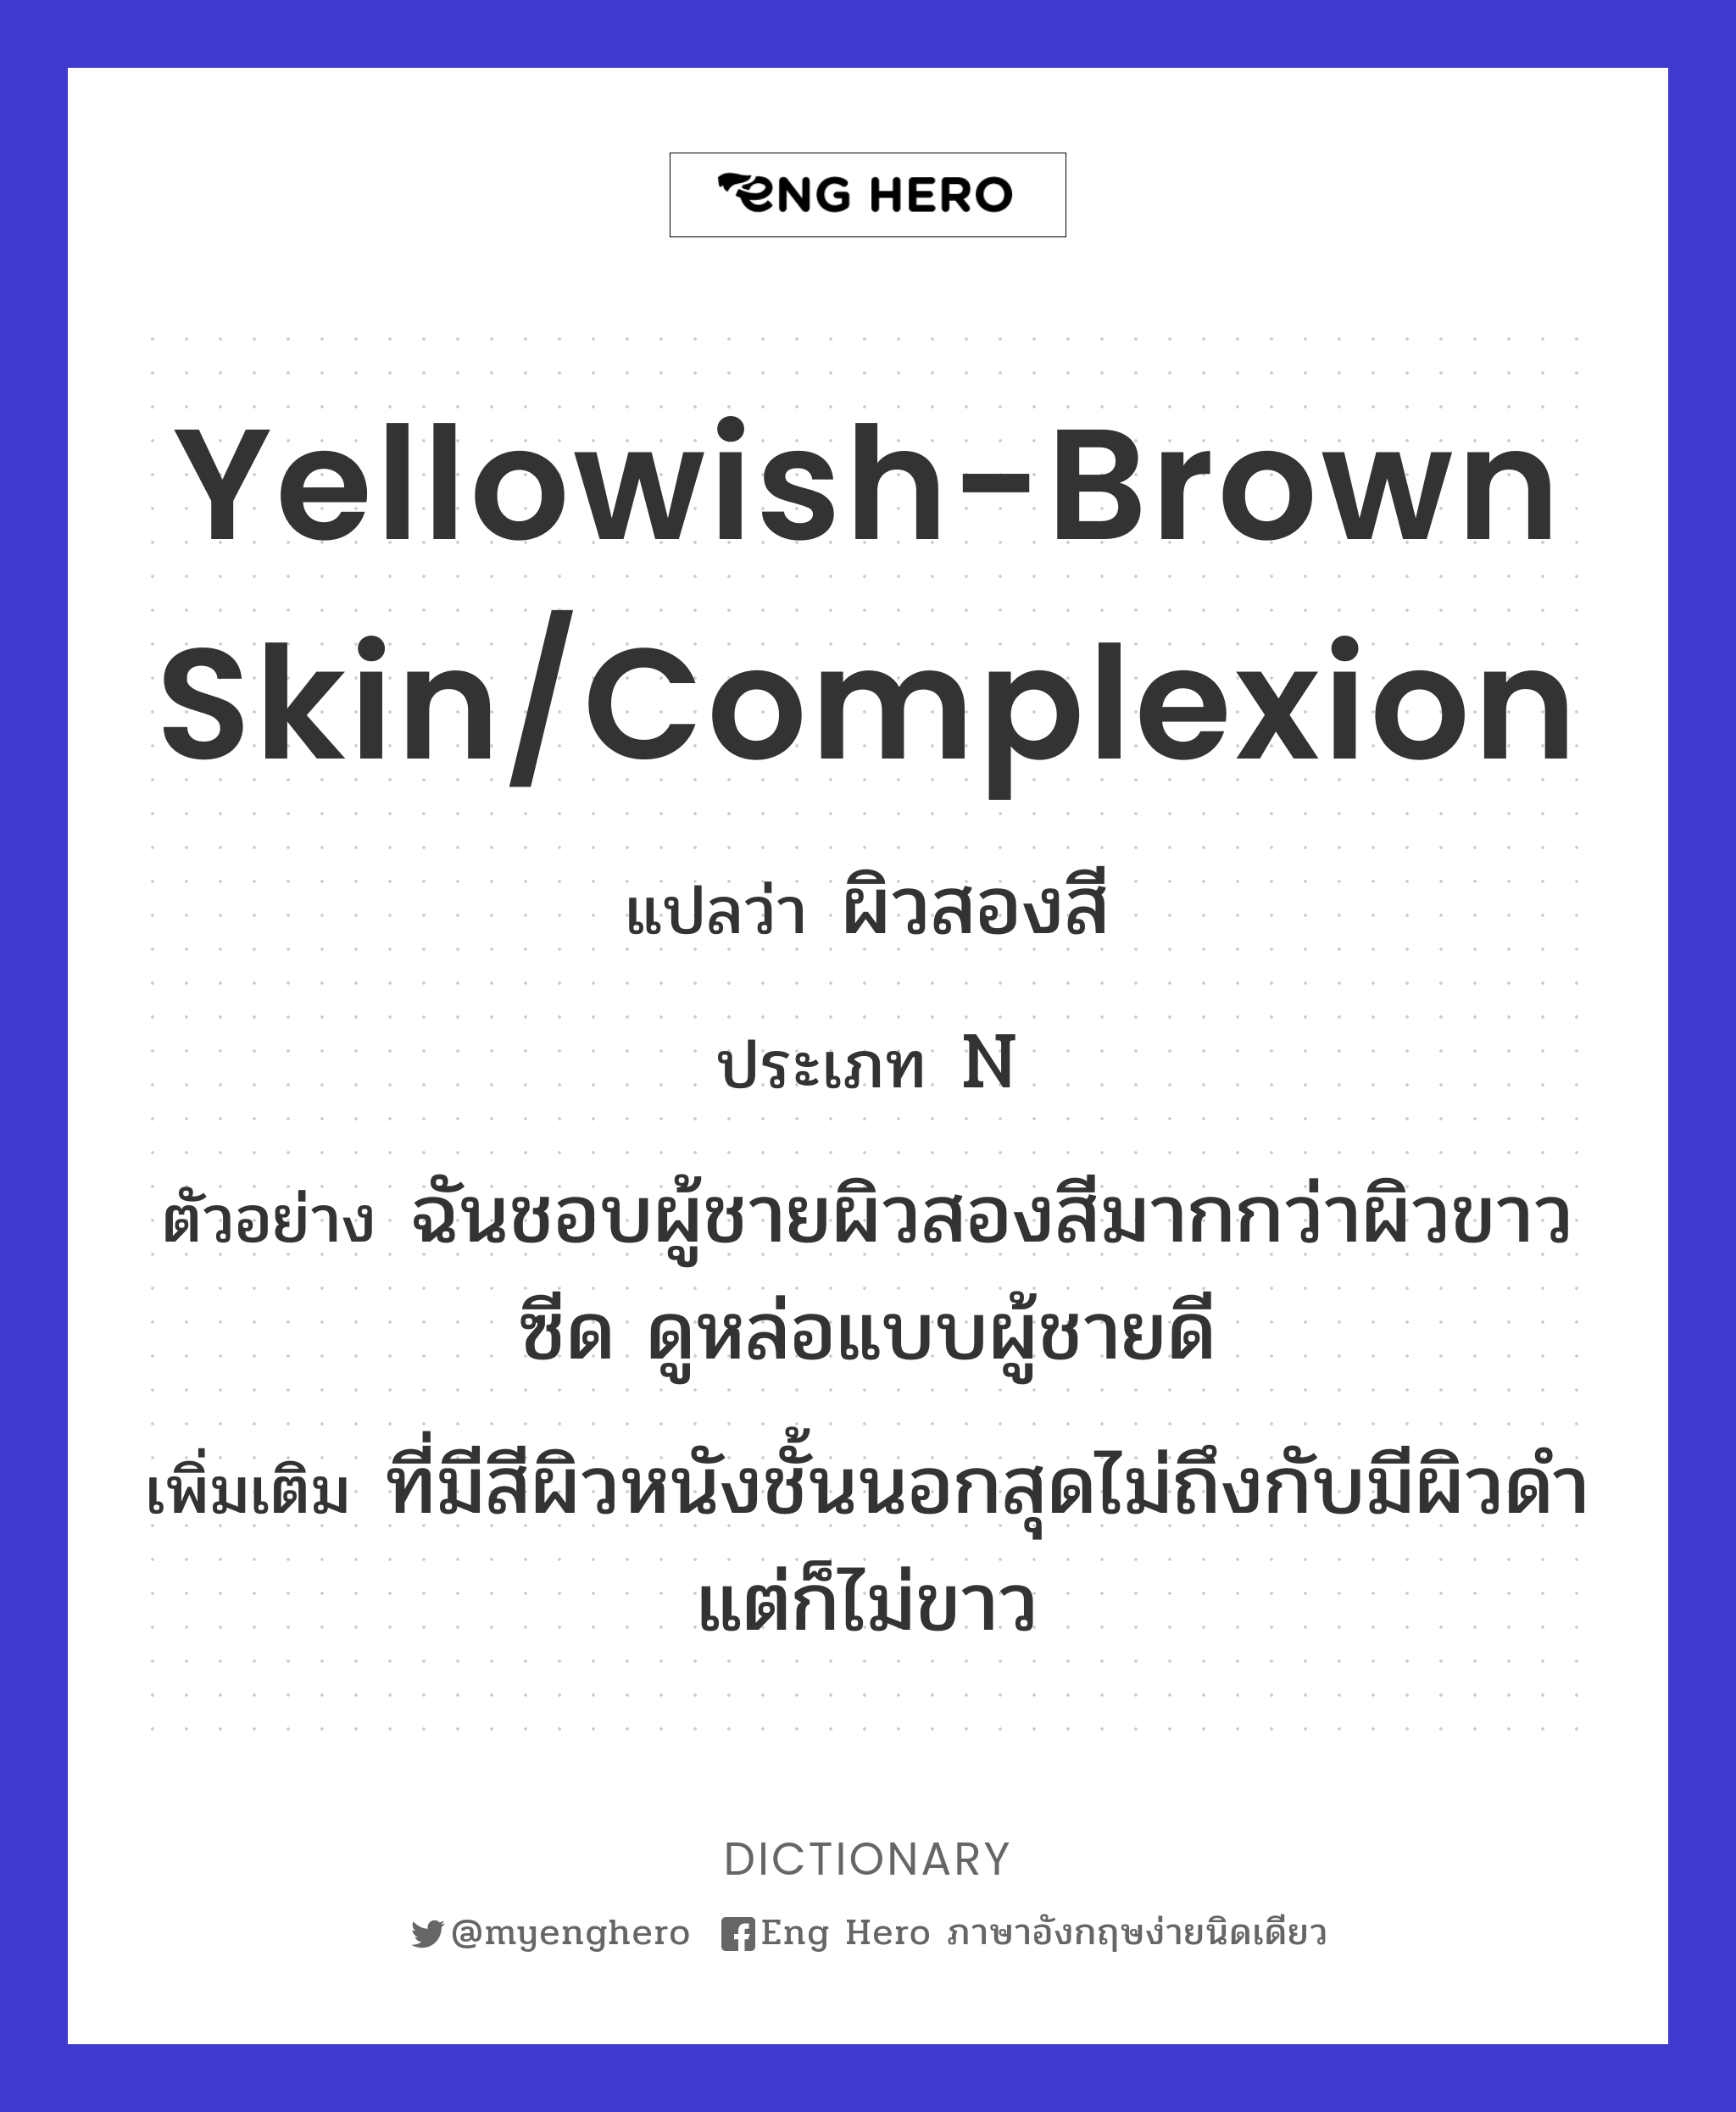 yellowish-brown skin/complexion